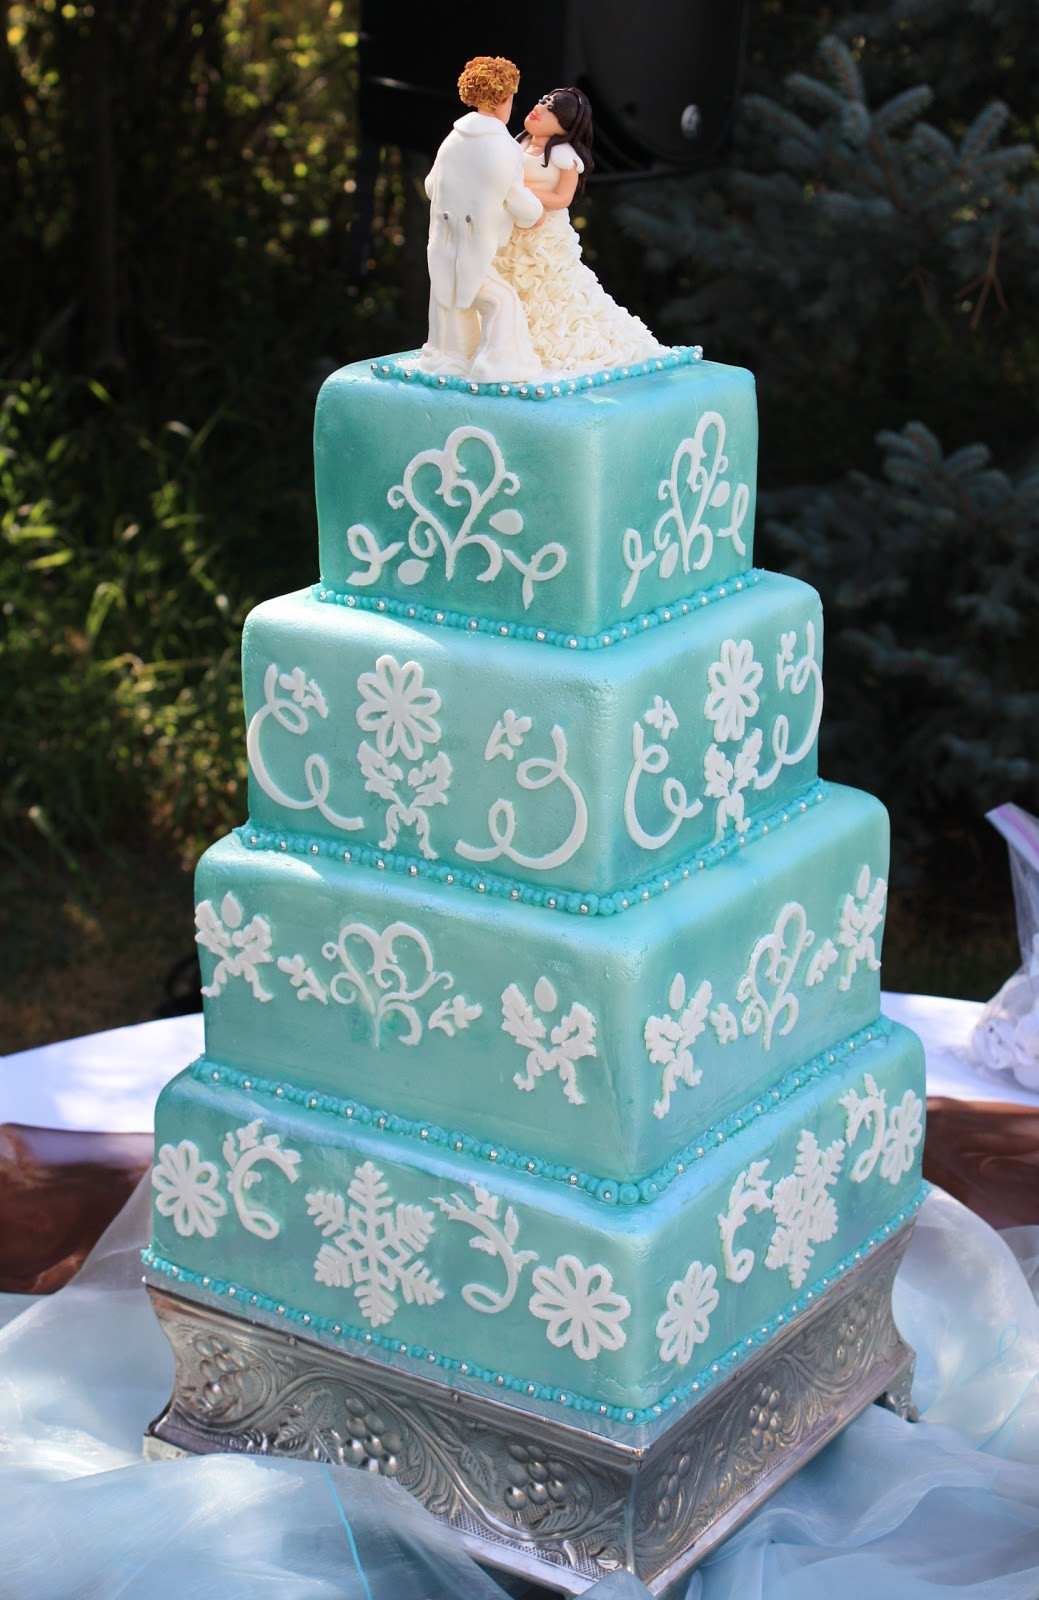 Teal Wedding Cakes
 The Cake Mama Teal Wedding cake